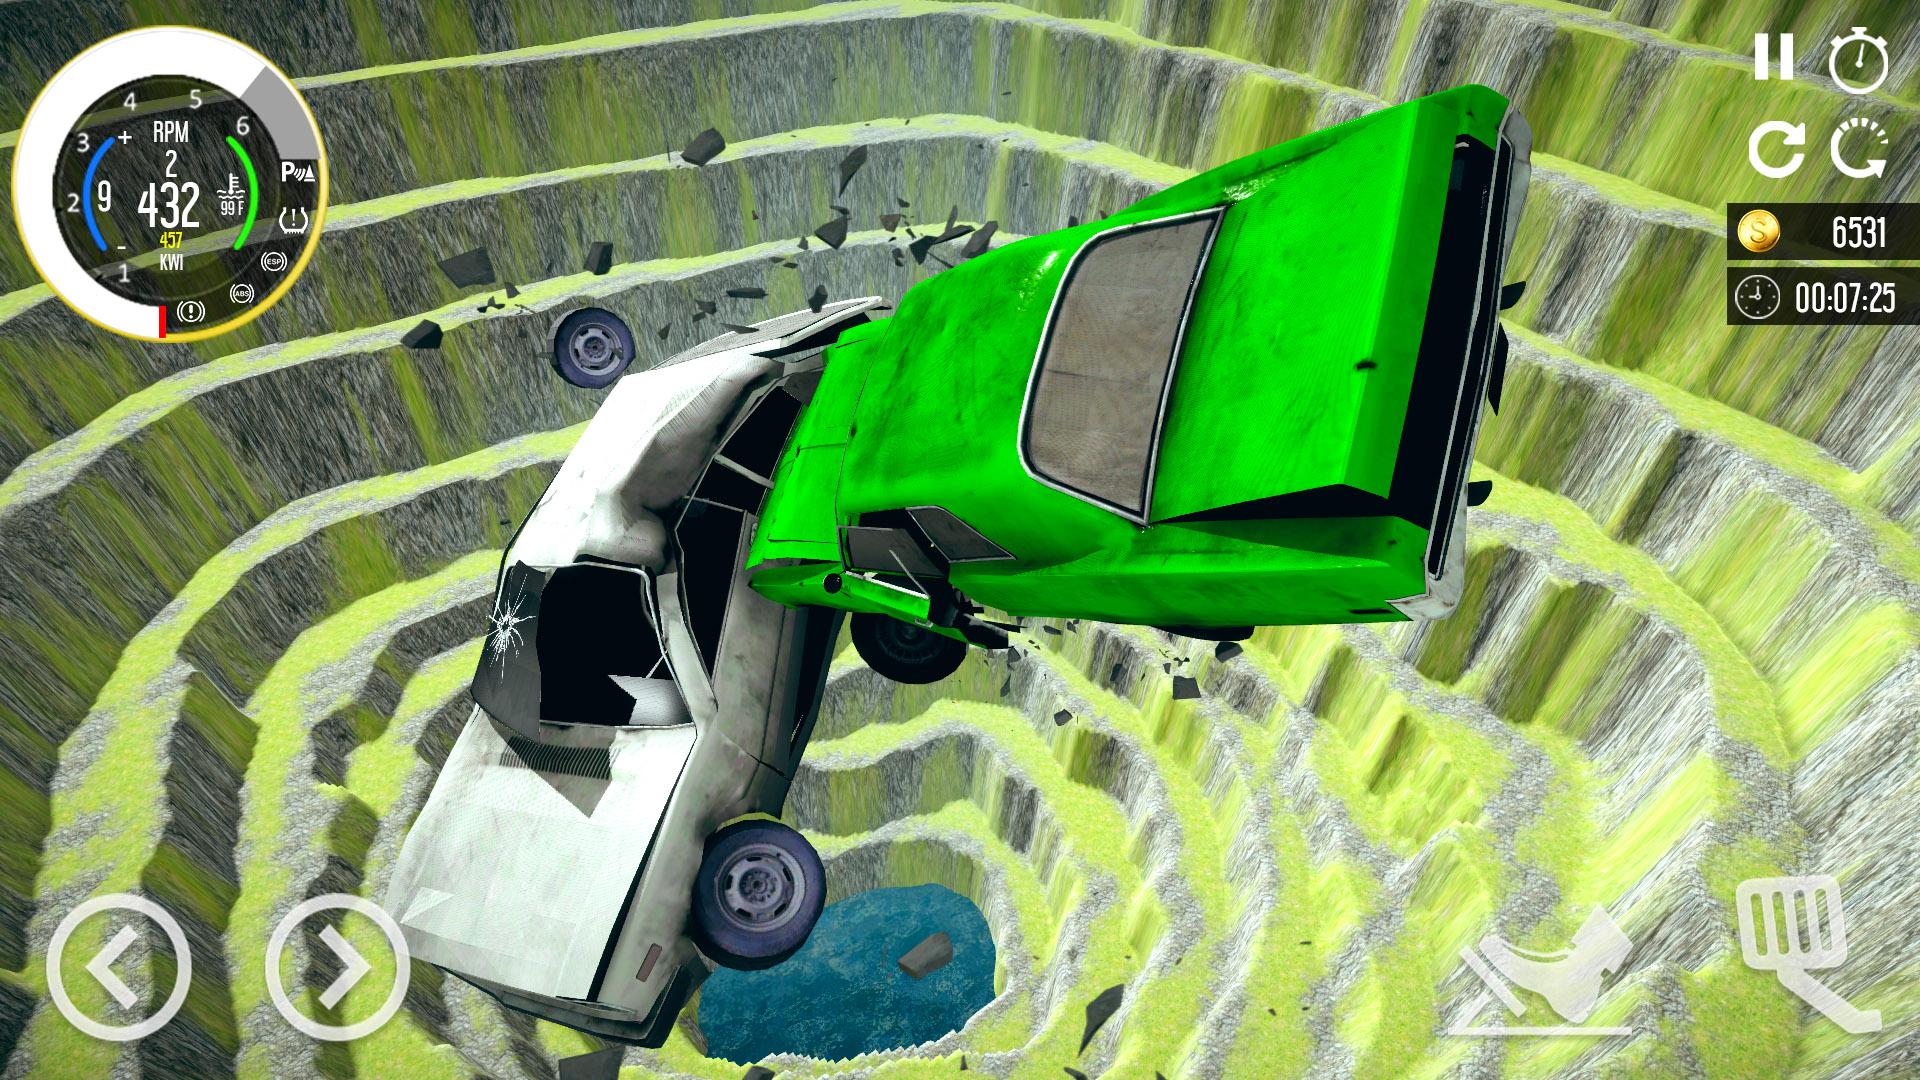 Beam Drive Car Crash Simulator 2021: Death Ramp